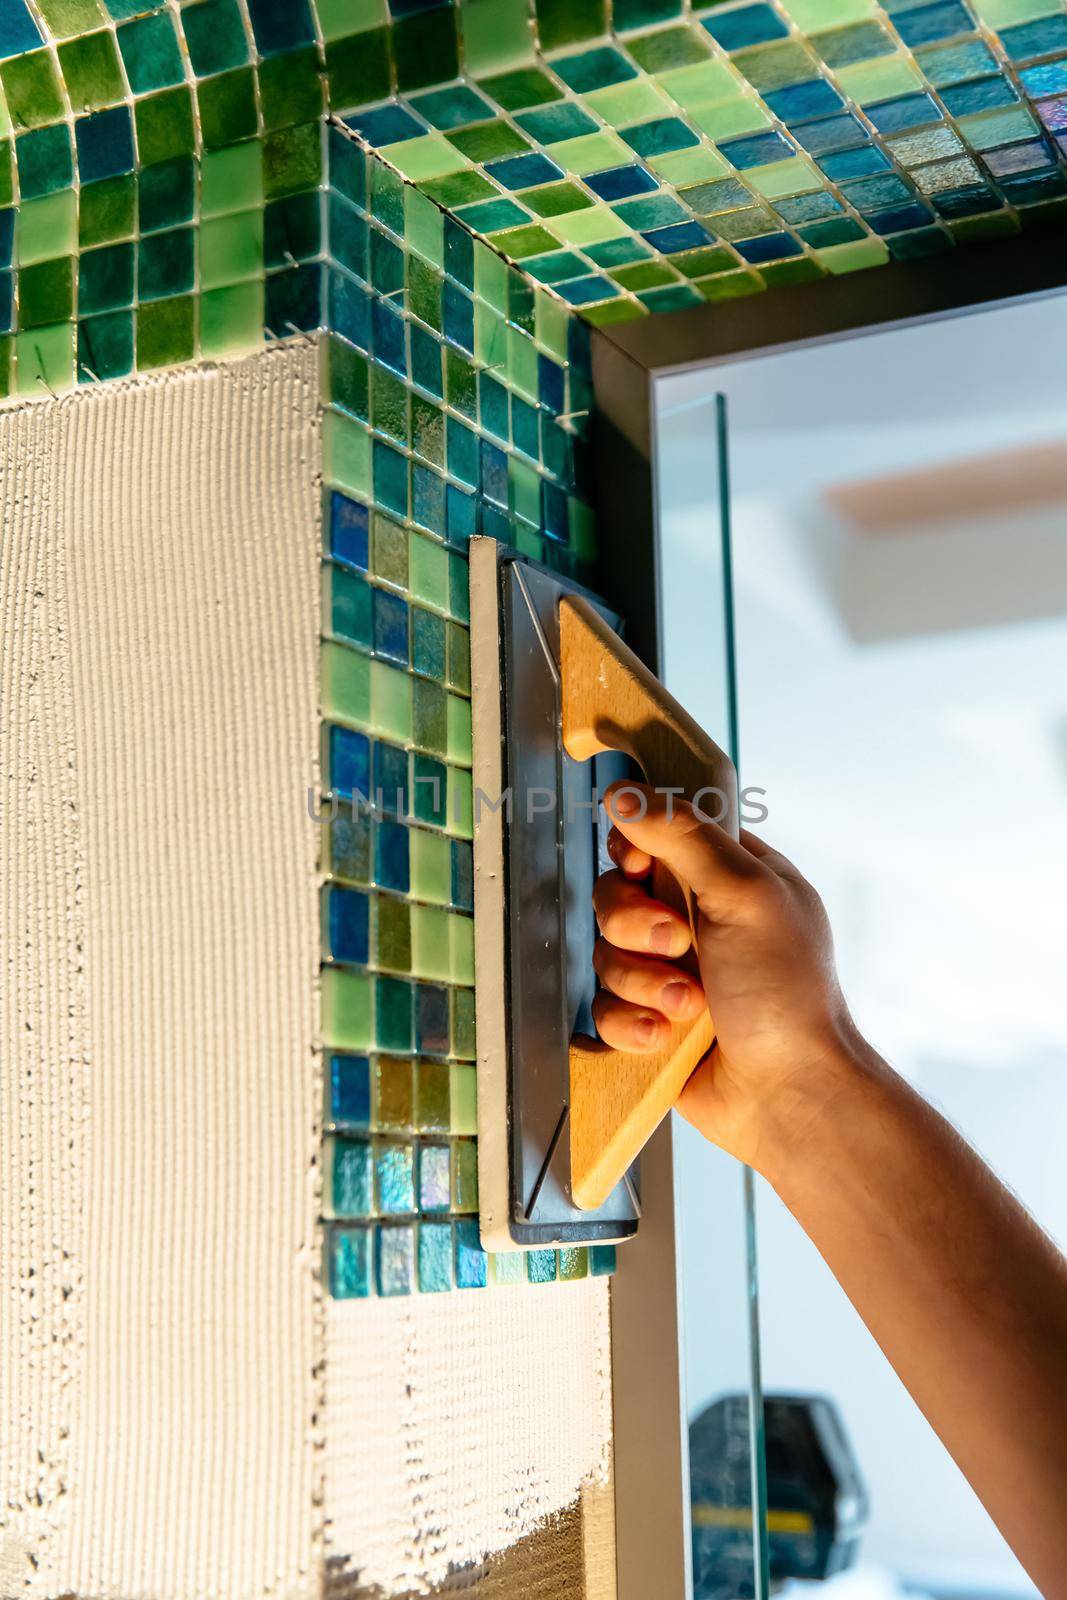 Applying mosaic tiles in bathroom, sauna walls. Construction tools and equipment. Spa or sauna relaxation modern room interior design. Adhesive for mosaic tile. Bath renovation.